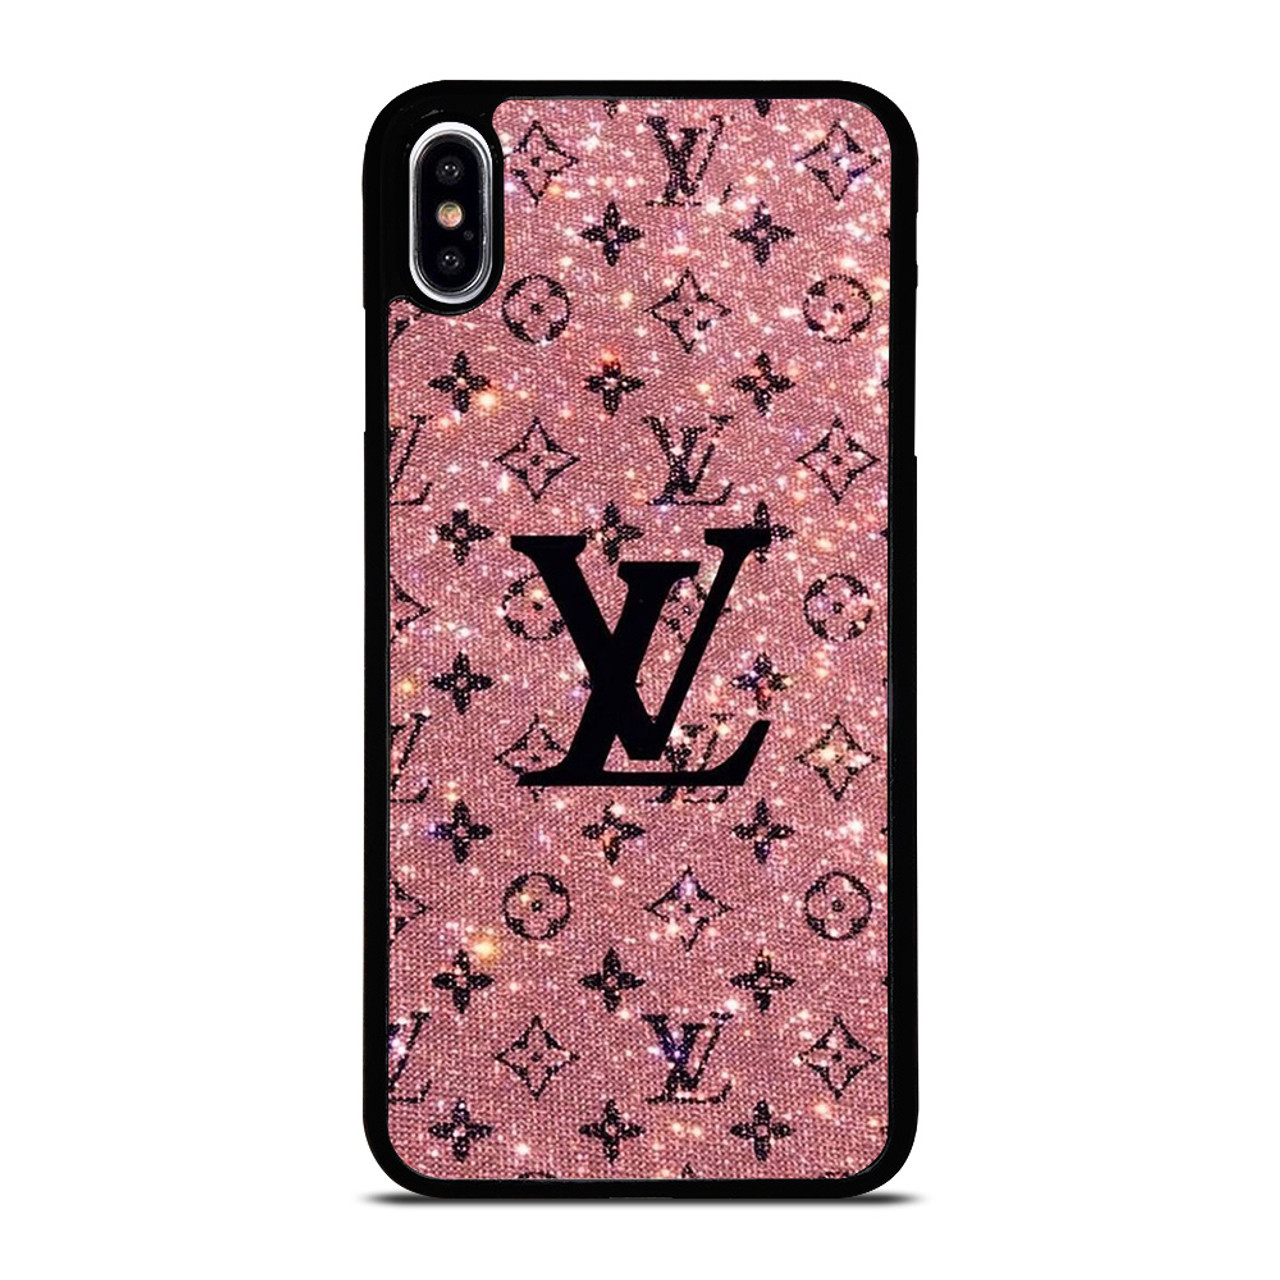 Case for iPhone XS MAX : Louis Vuitton logo